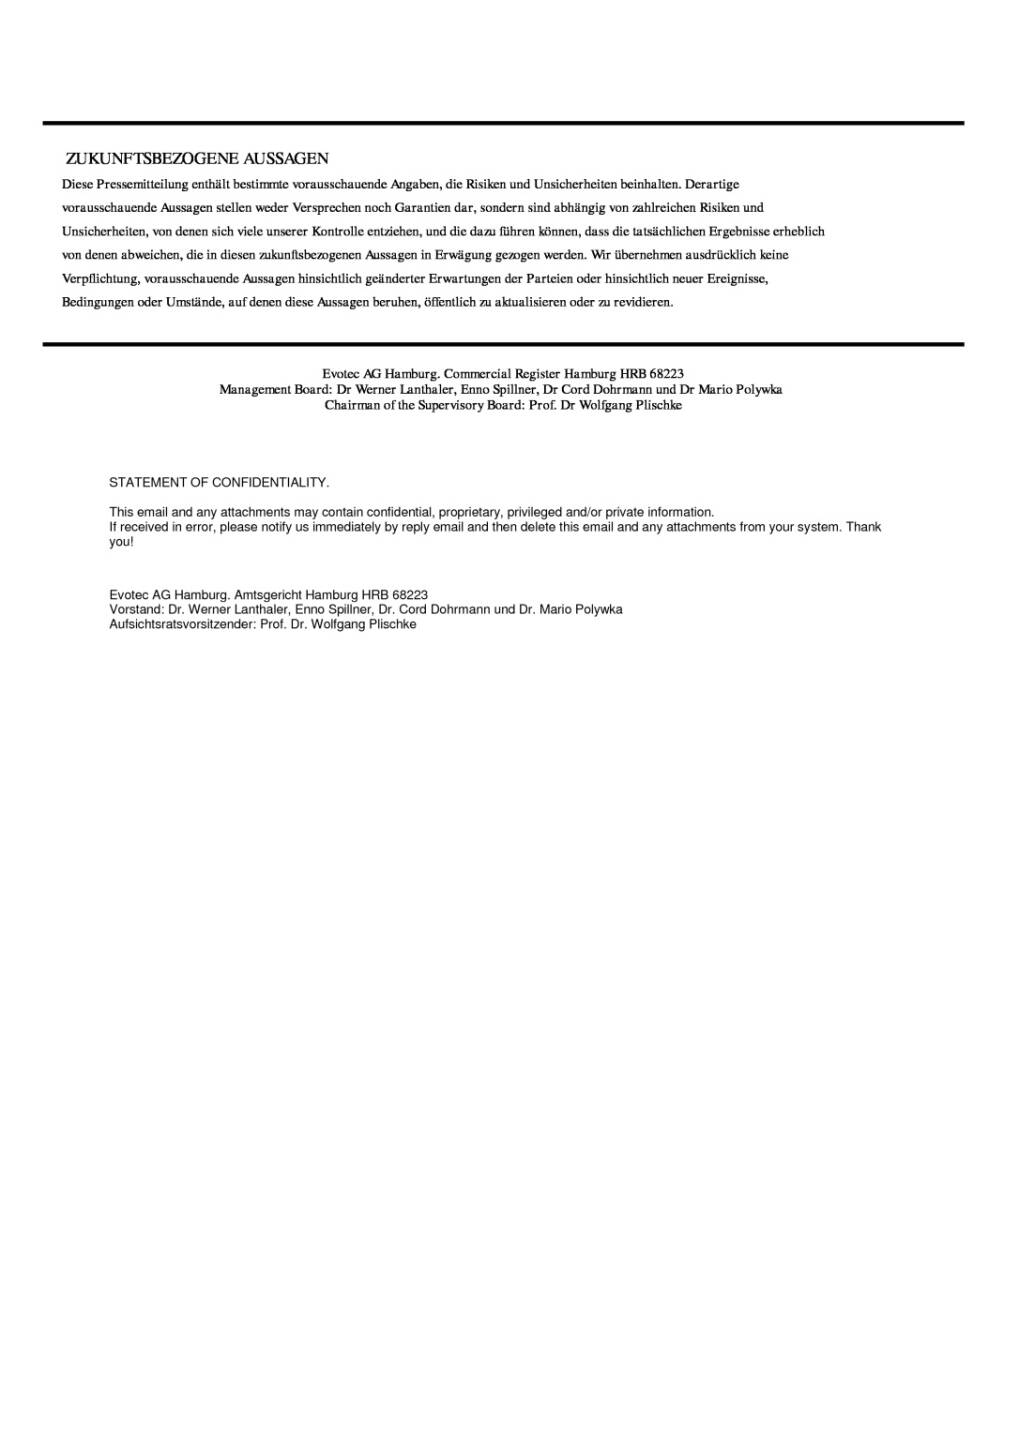 Evotec: Meilenstein in Endometriose-Allianz mit Bayer, Seite 3/3, komplettes Dokument unter http://boerse-social.com/static/uploads/file_1844_evotec_meilenstein_in_endometriose-allianz_mit_bayer.pdf